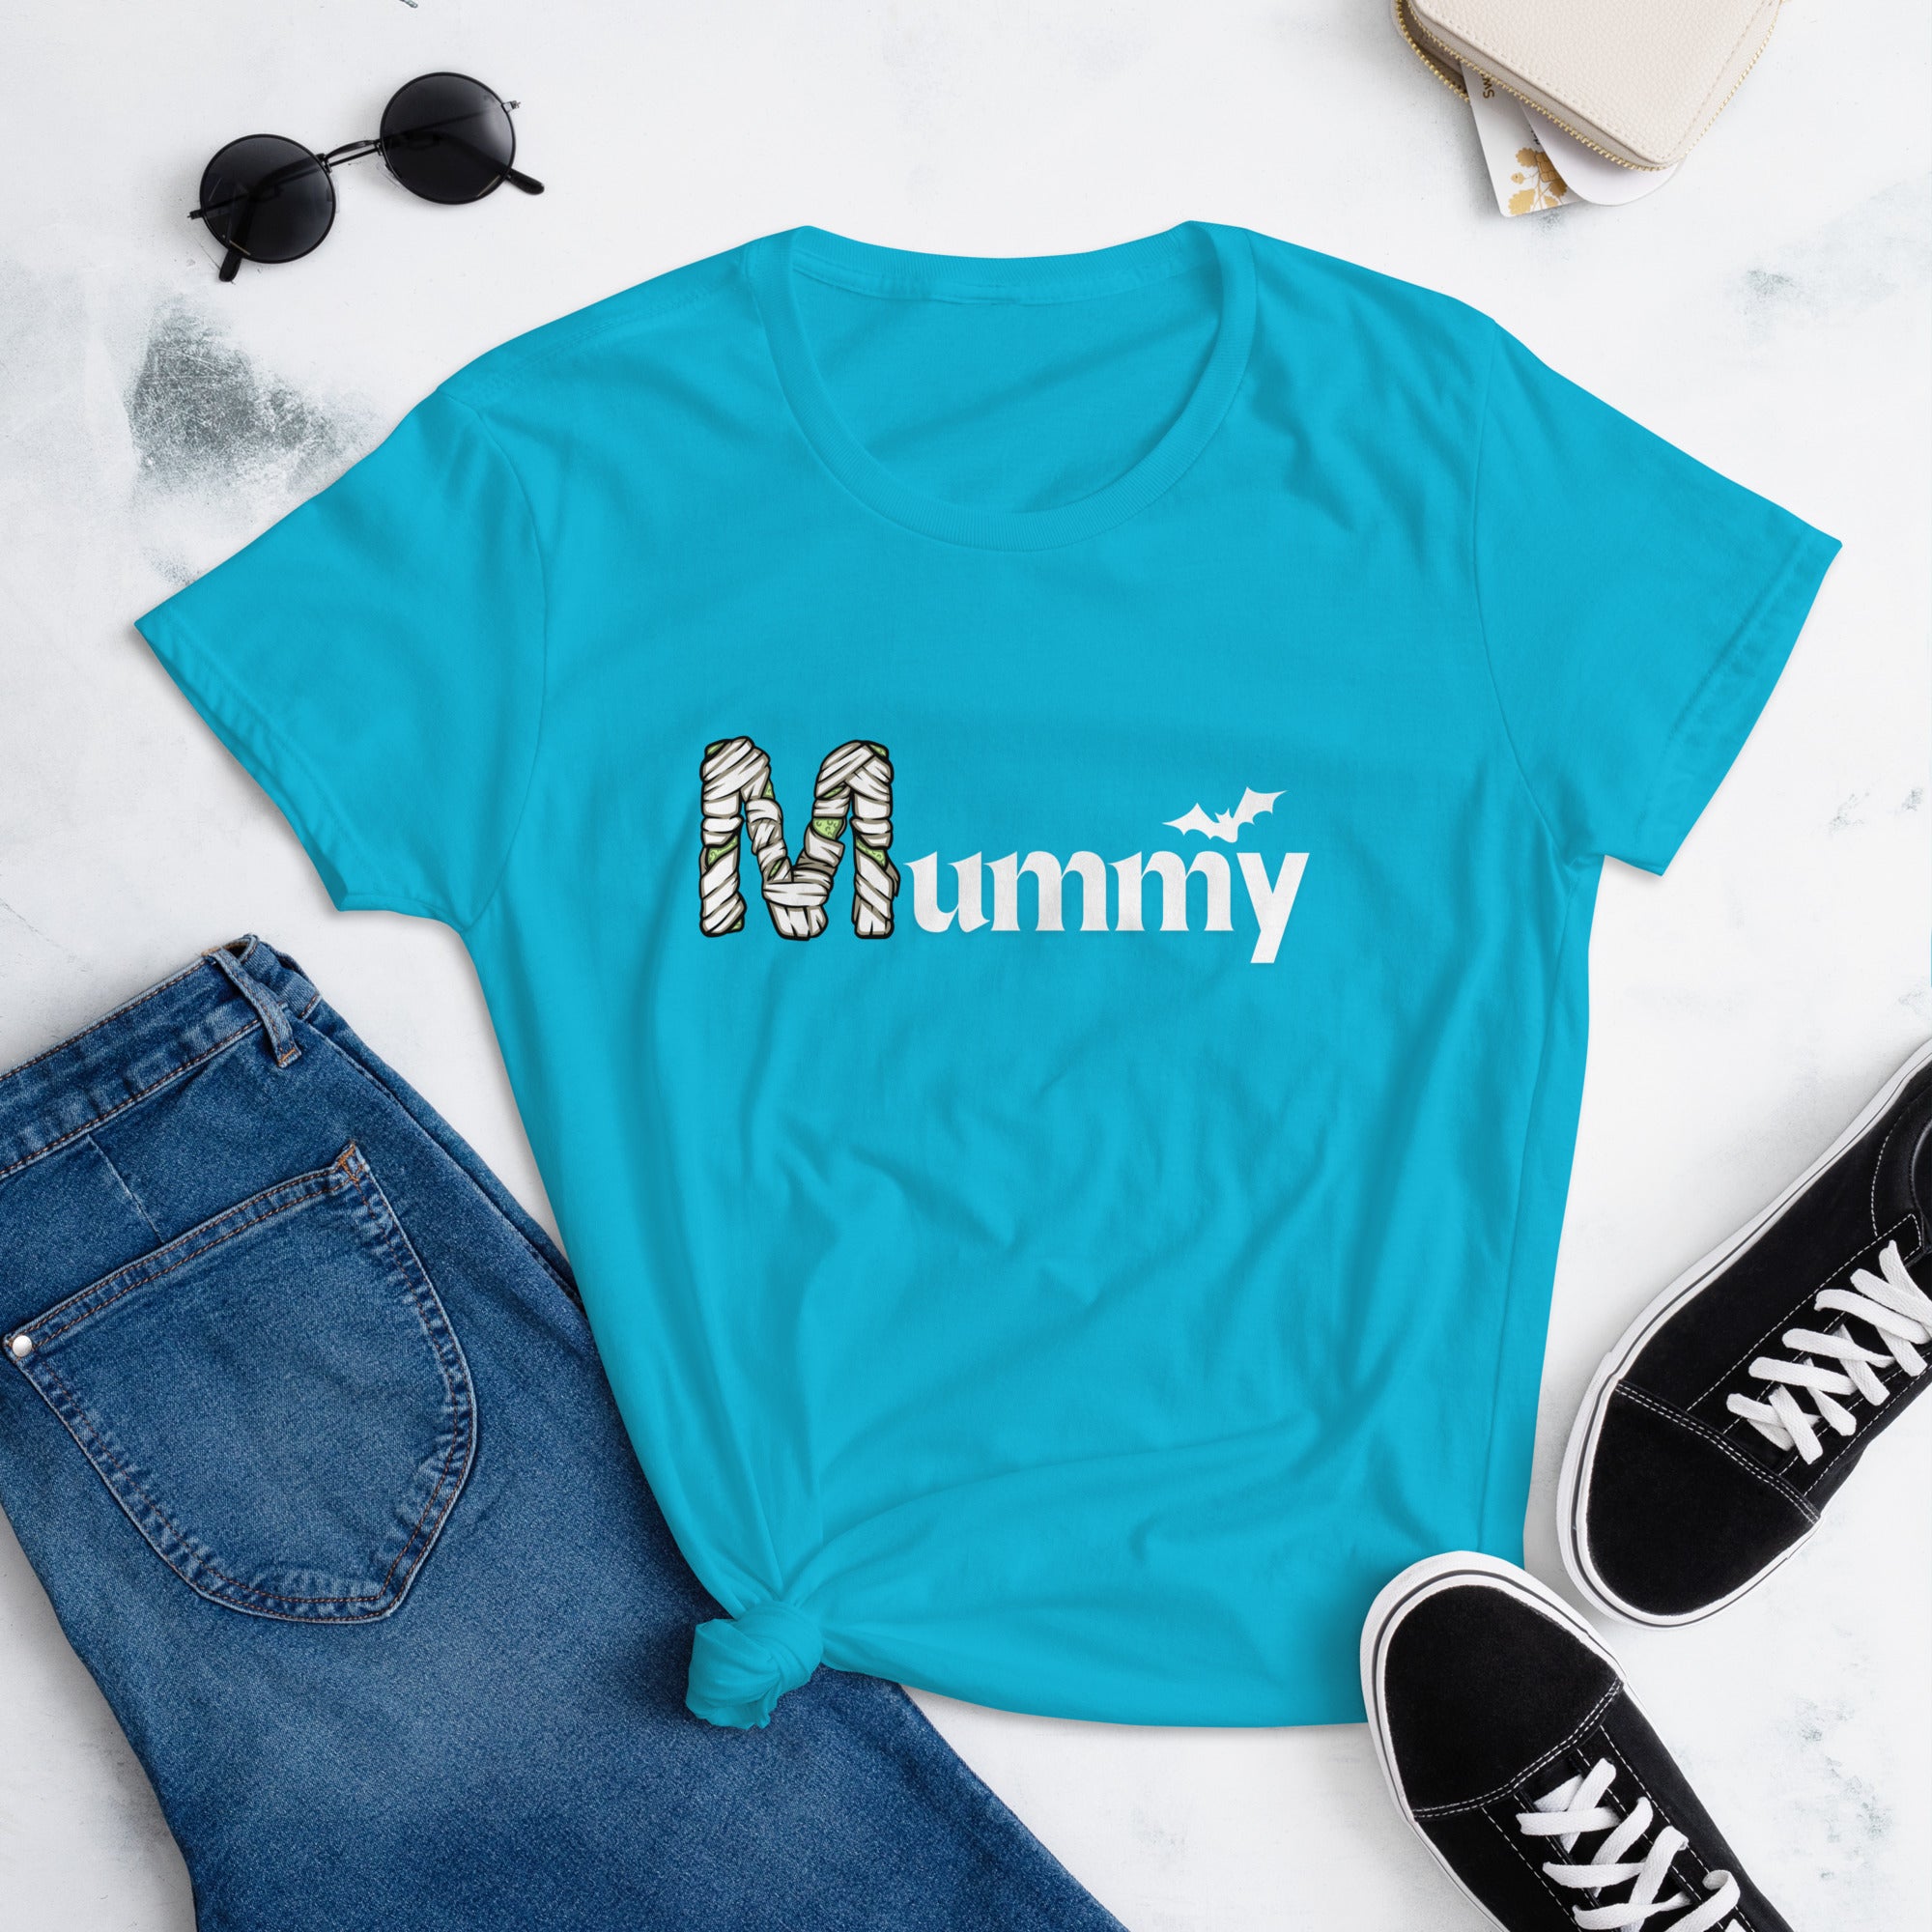 Mummy, Halloween T Shirts for Moms